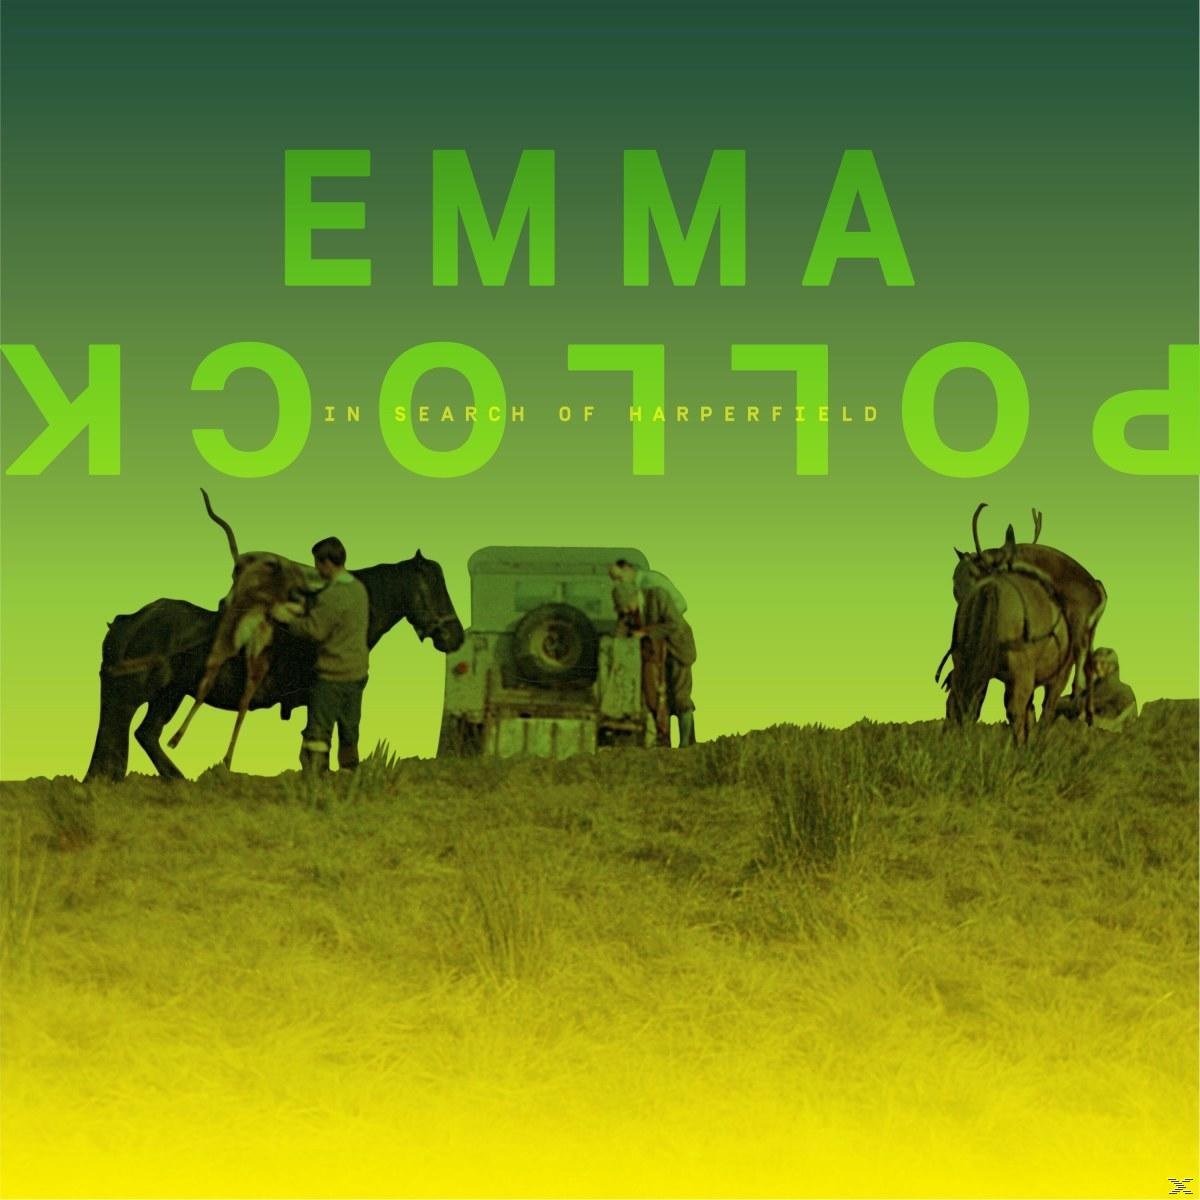 Emma Pollock - Of In - (CD) Harperfield Search